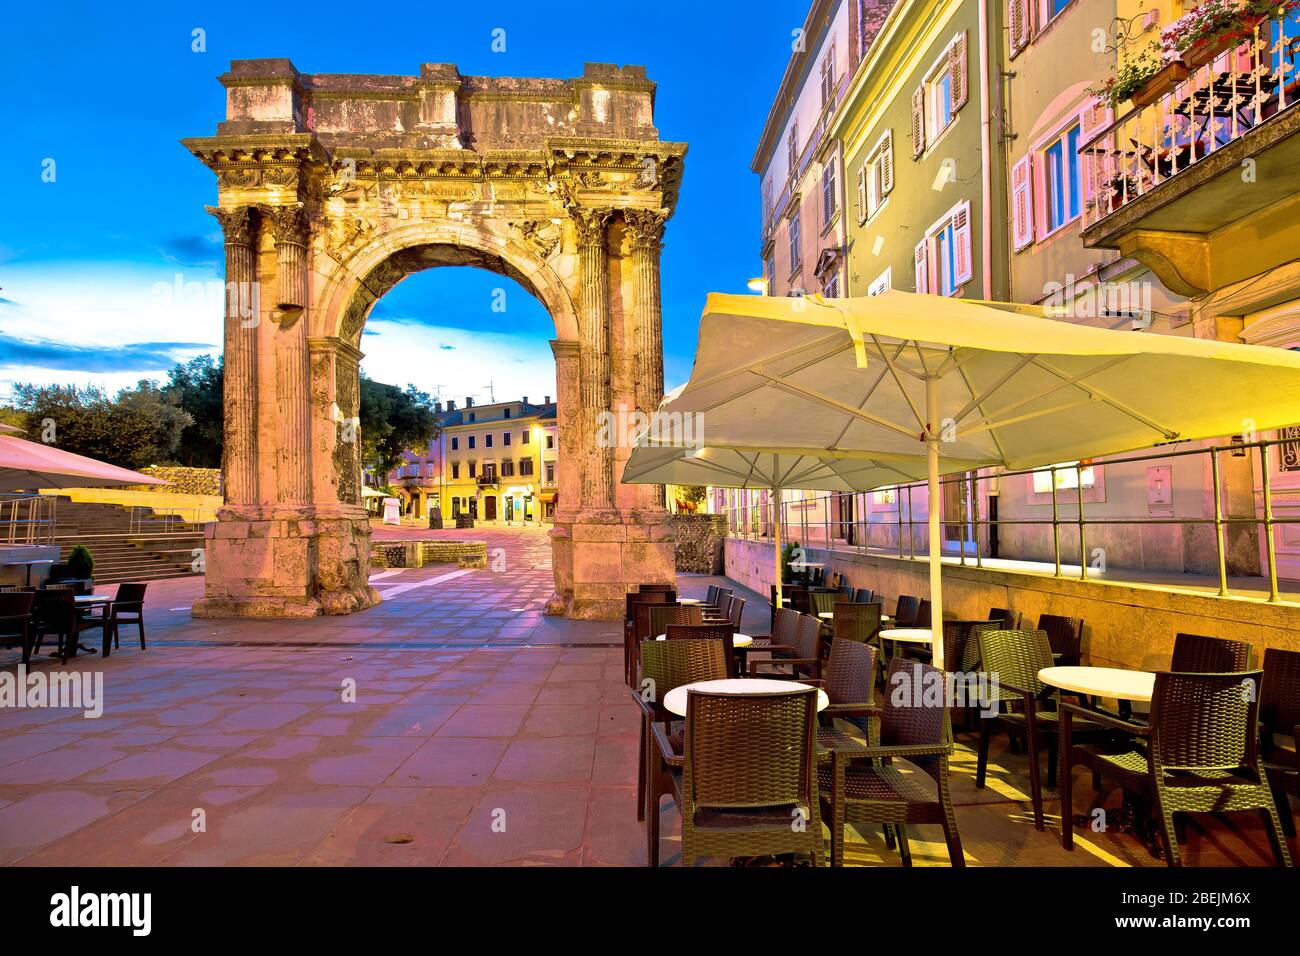 Square in Pula with historic Roman Golden gate street view, Istria region of Croatia Stock Photo